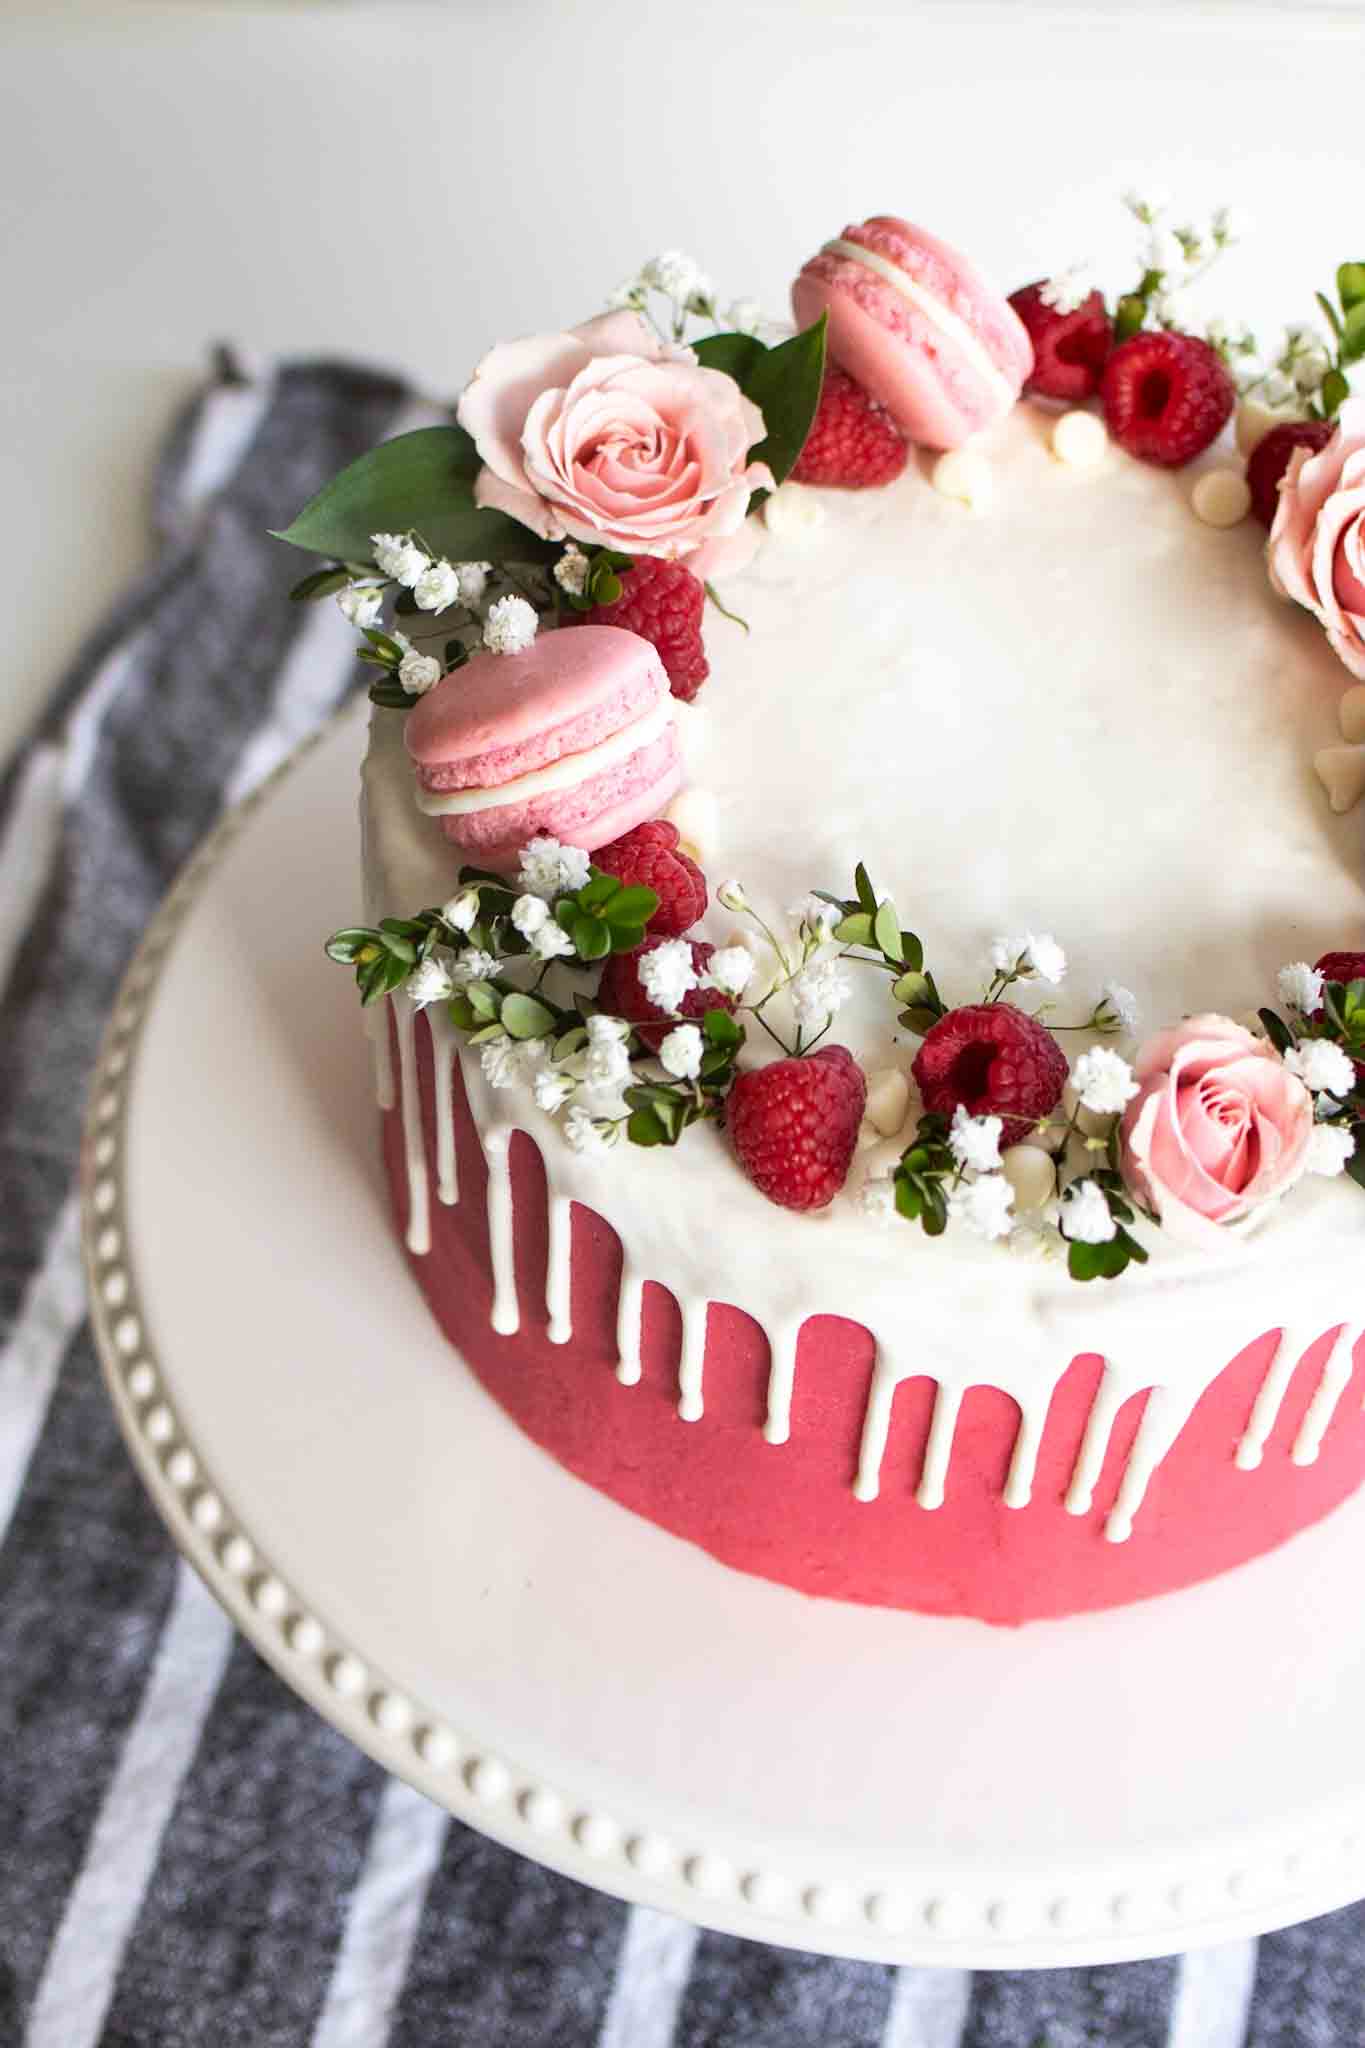 white chocolate raspberry cake